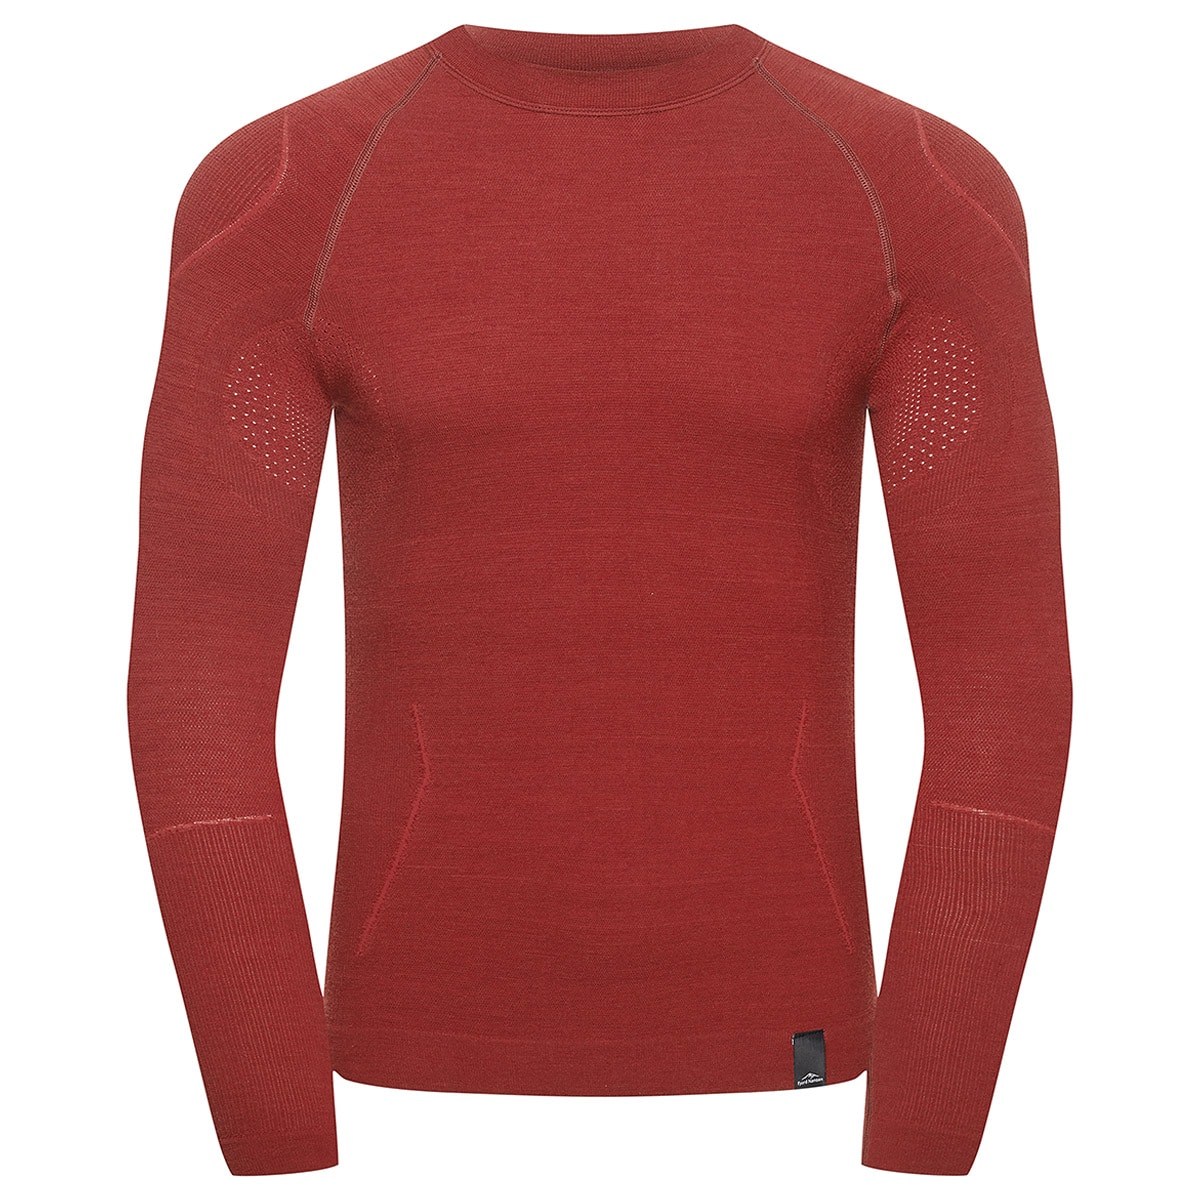 Koszulka termoaktywna Fjord Nansen Merino OXIVA Long Sleeve - Oaky Red